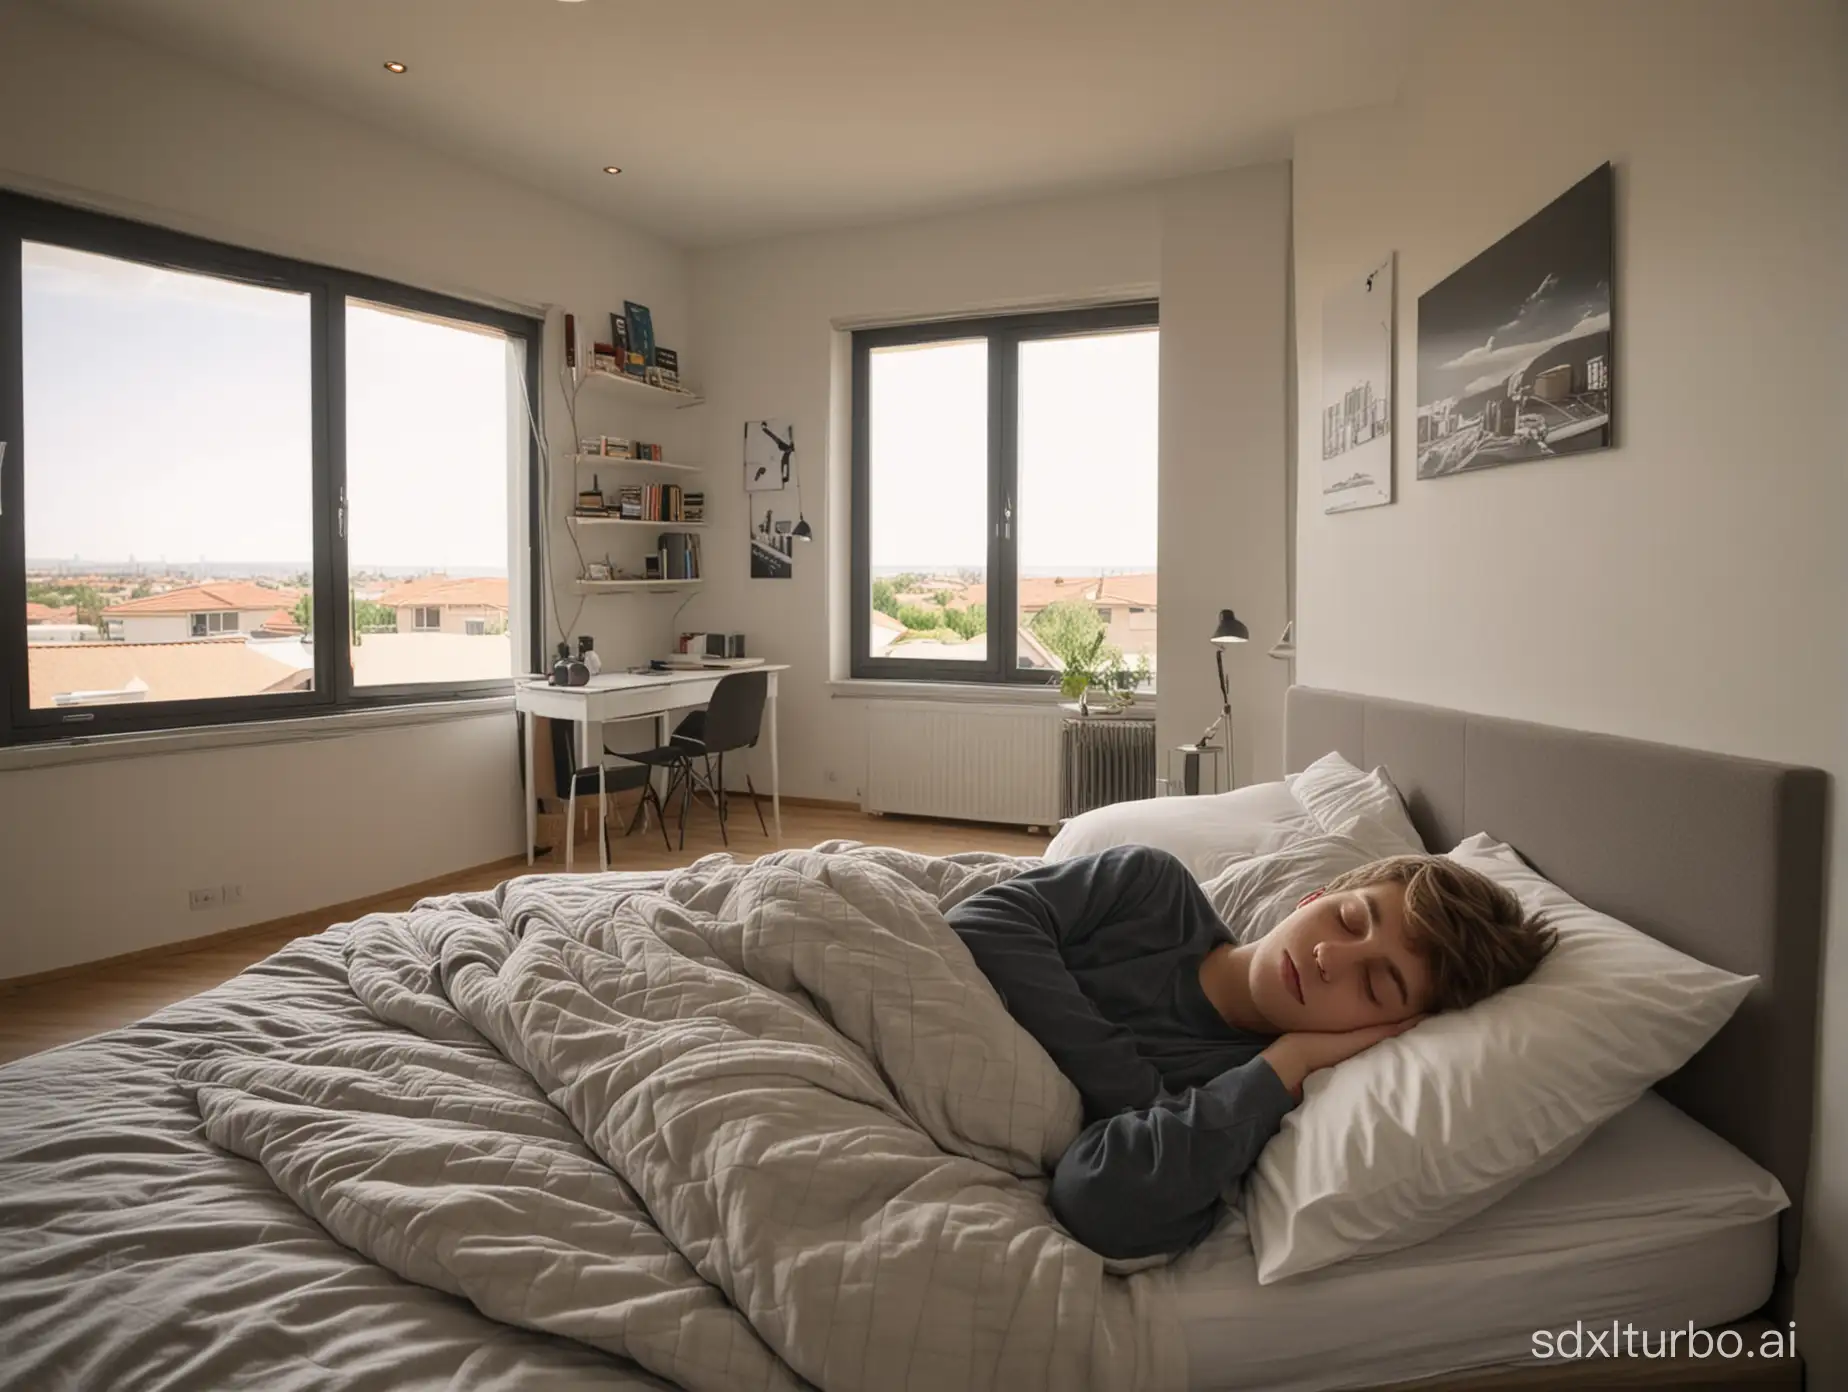 Teenage-Boy-Asleep-in-Contemporary-Home